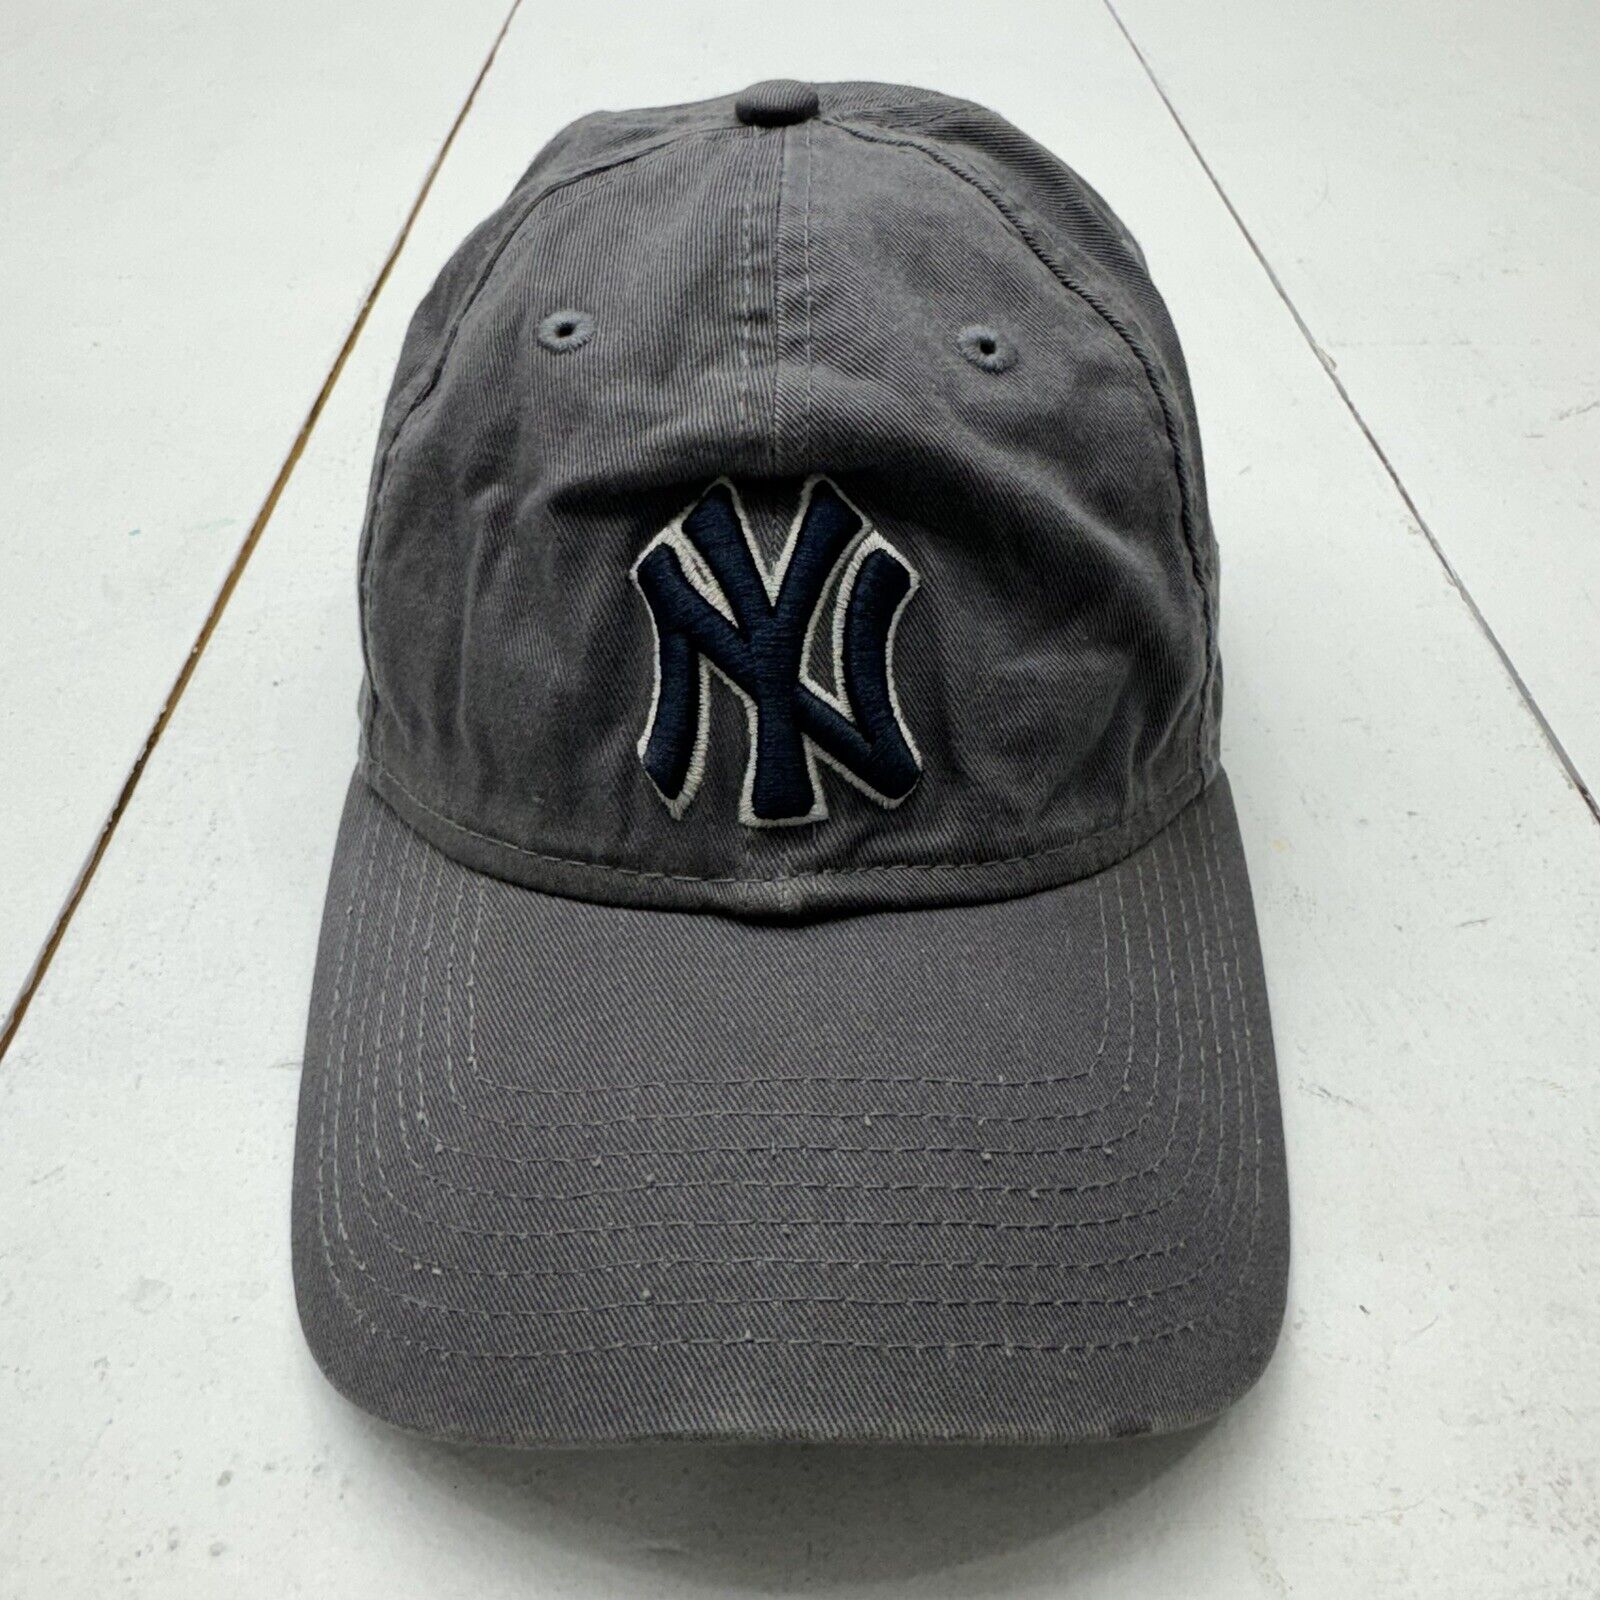 New Era Grey New York Yankees Baseball Cap Adjustable One Size Fits Most Unisex